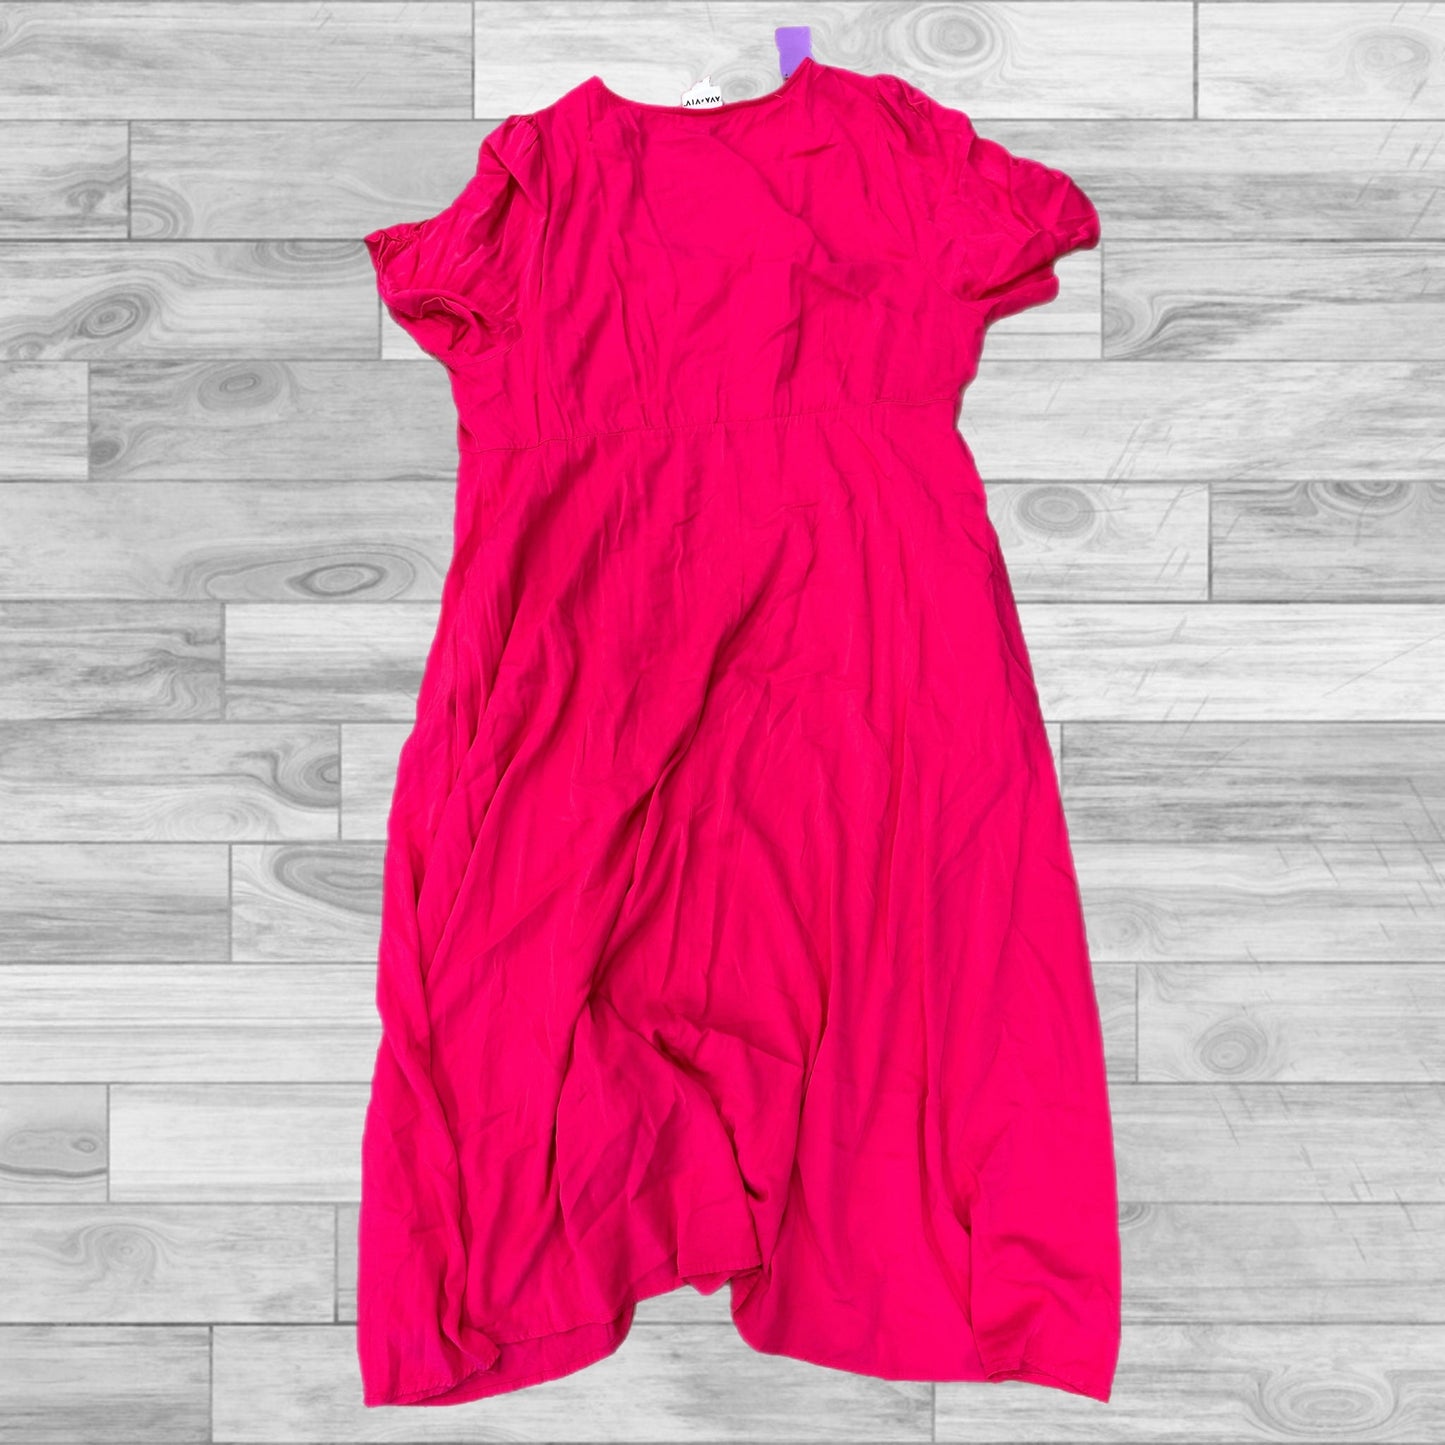 Pink Dress Casual Maxi Ava & Viv, Size 1x